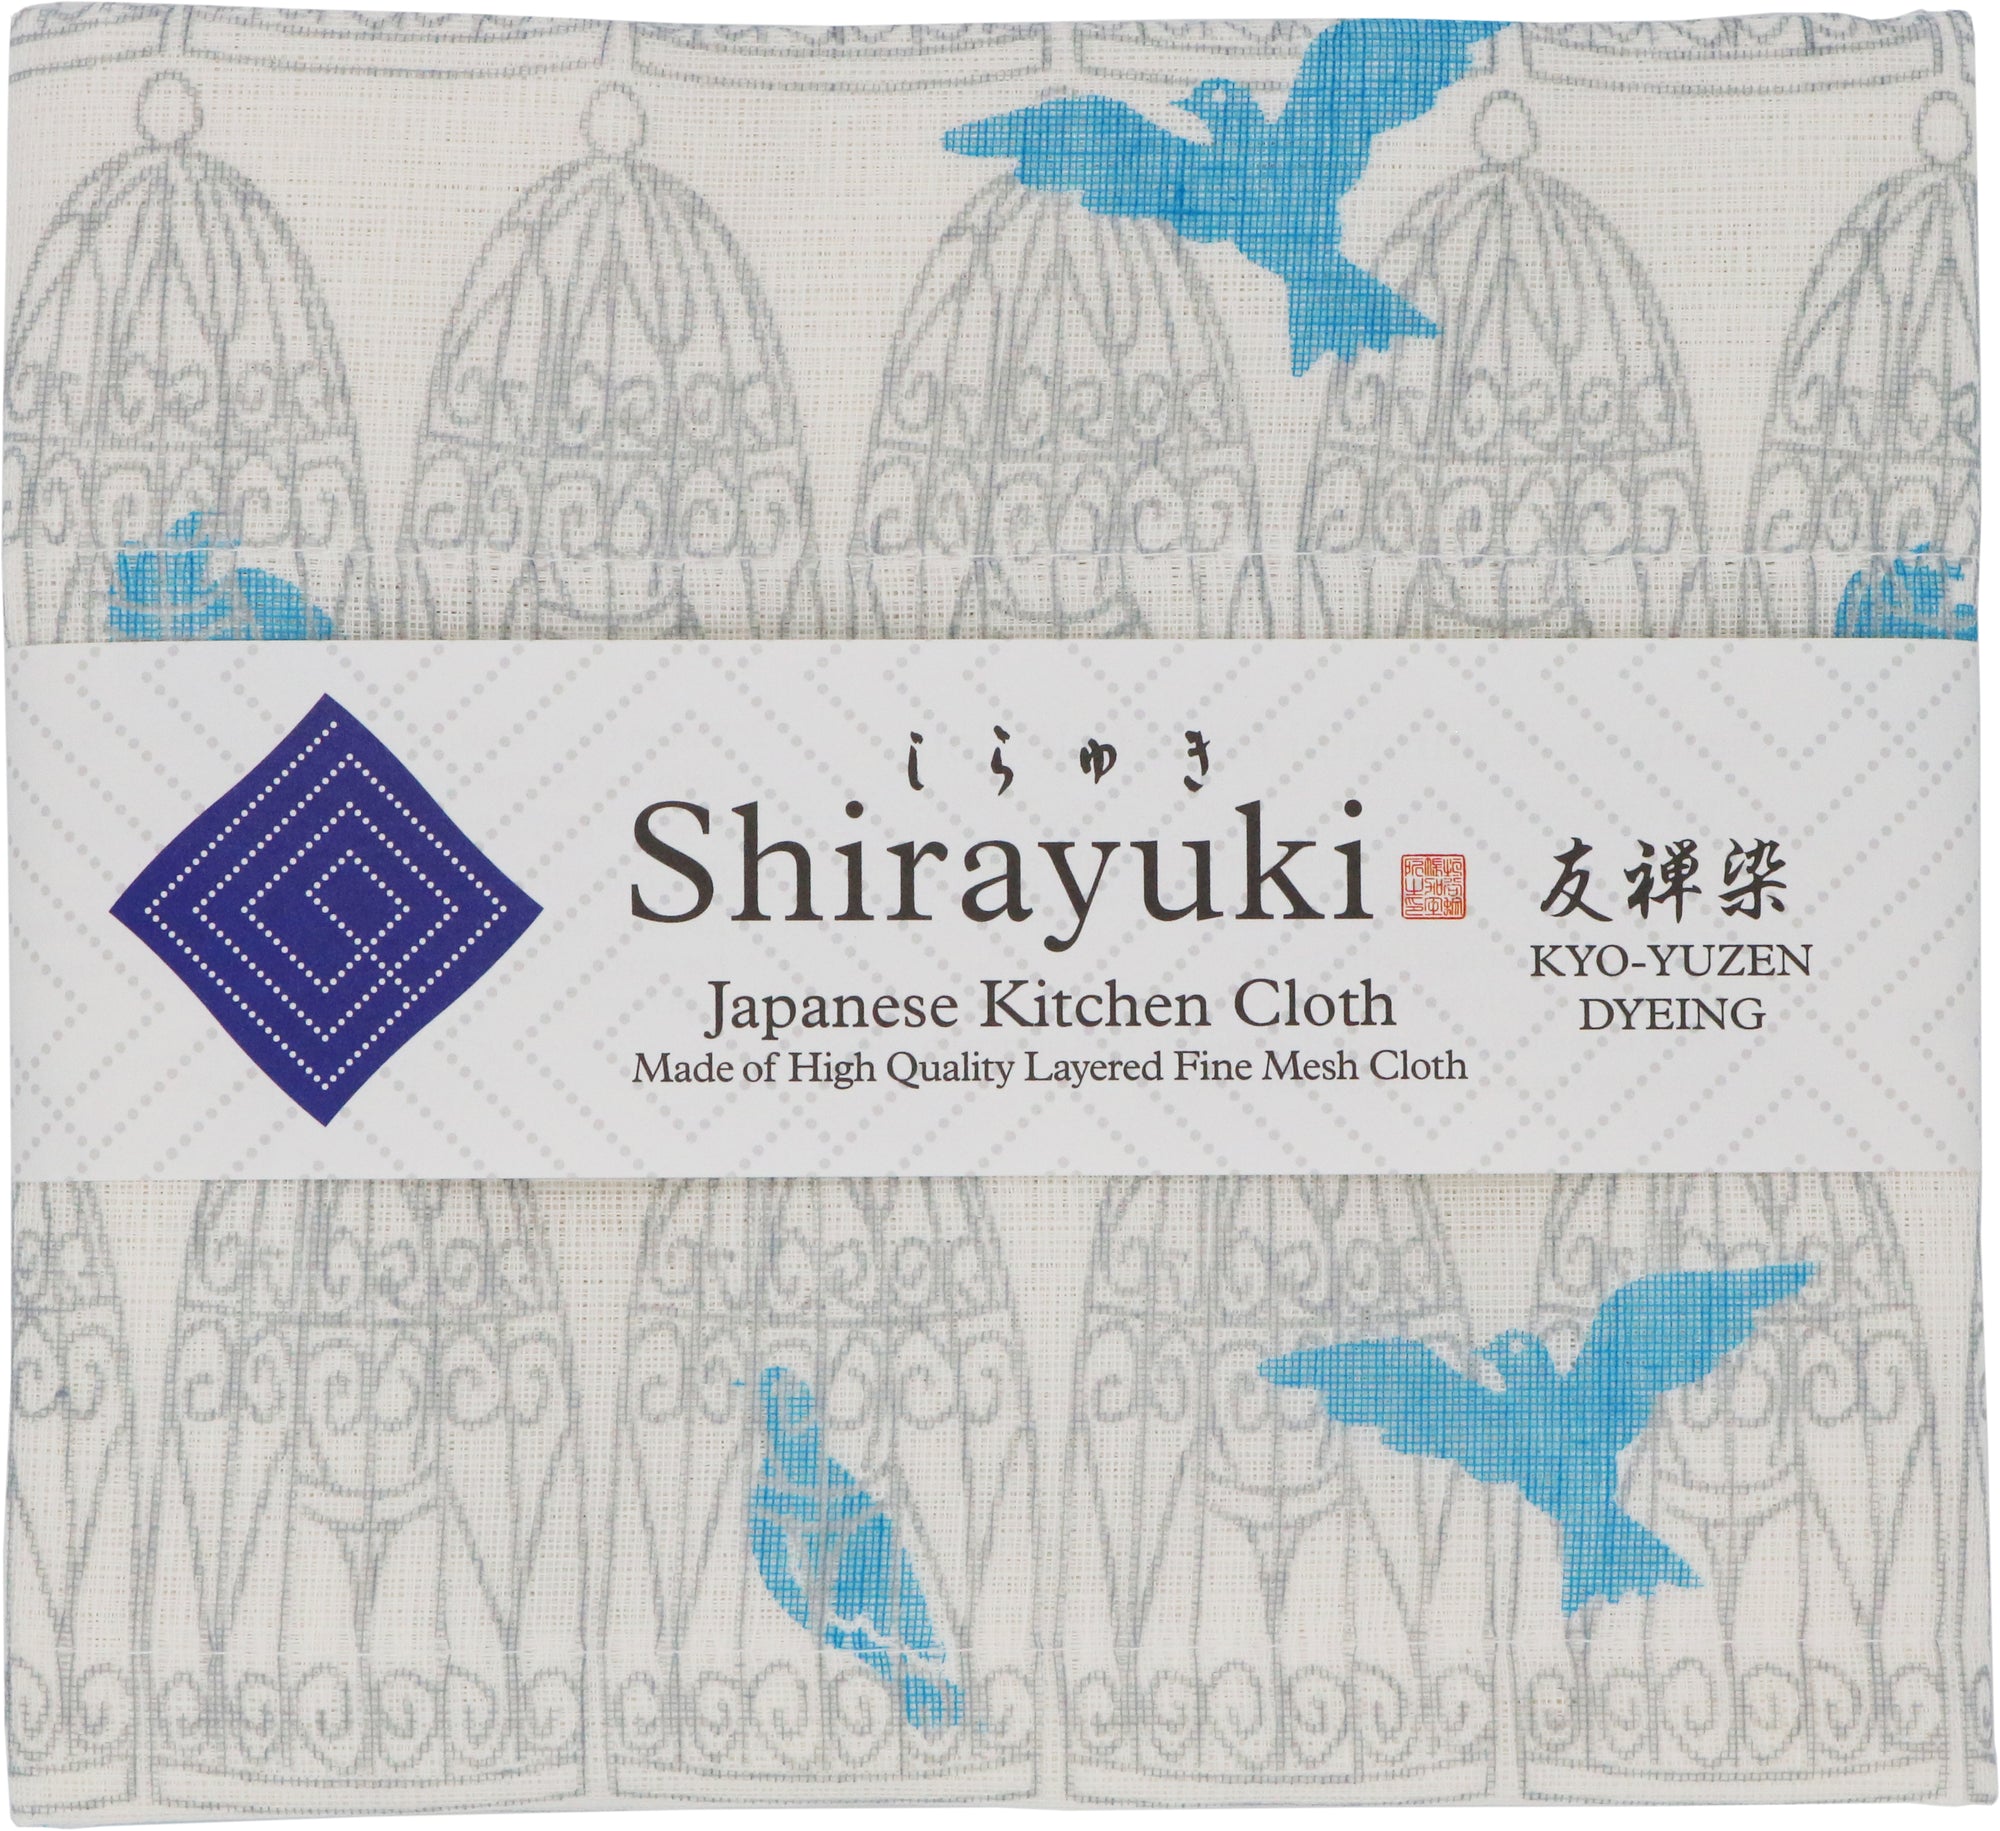 Shirayuki Japanese Kitchen Cloth. Made of Fine Layered Mesh Cloth. Dish Wipe, Table Wipe. Made in Japan (Gray, Blue Birds)